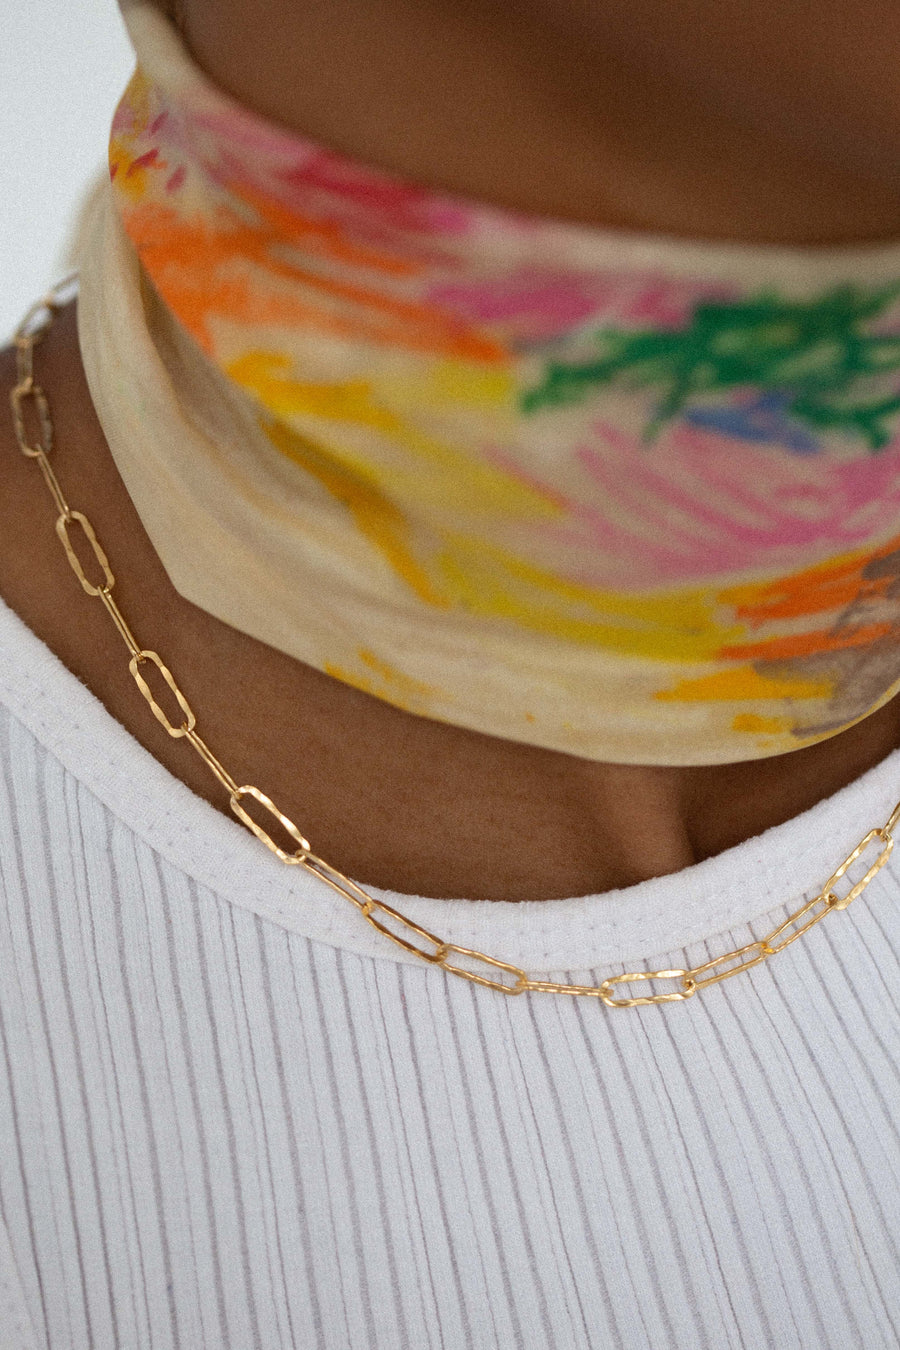 SAMSA Golden Hammered Necklace